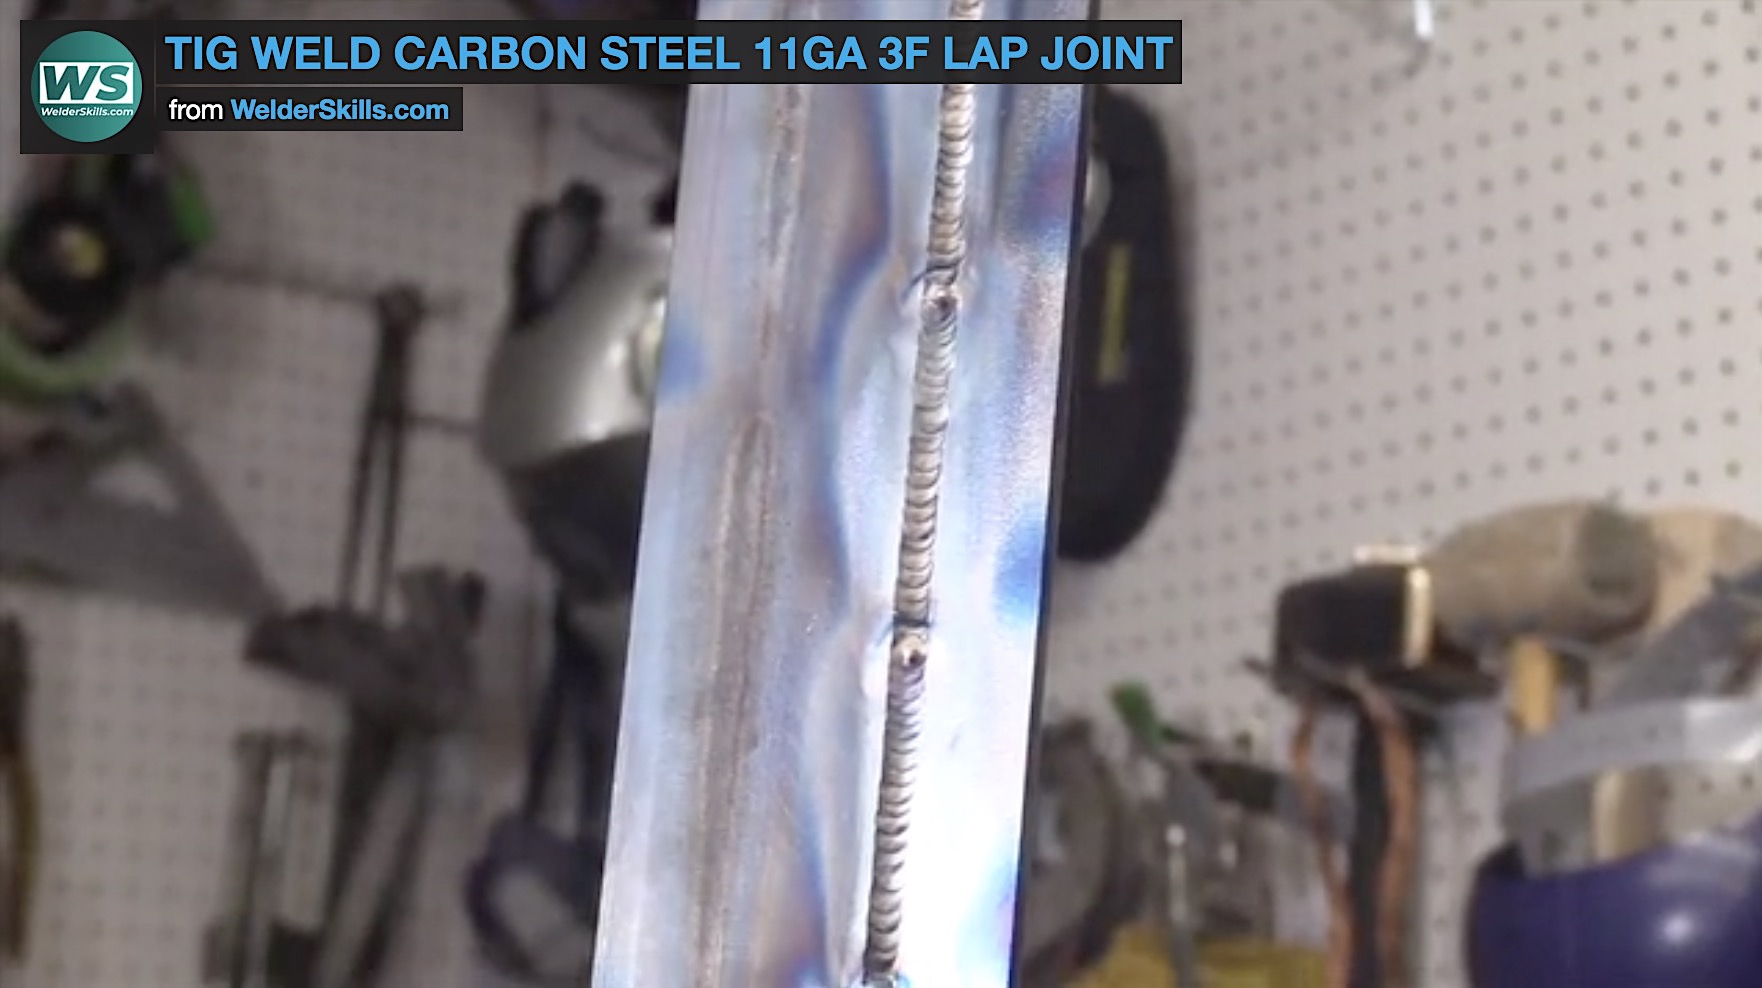 tig welding carbon steel lap joint